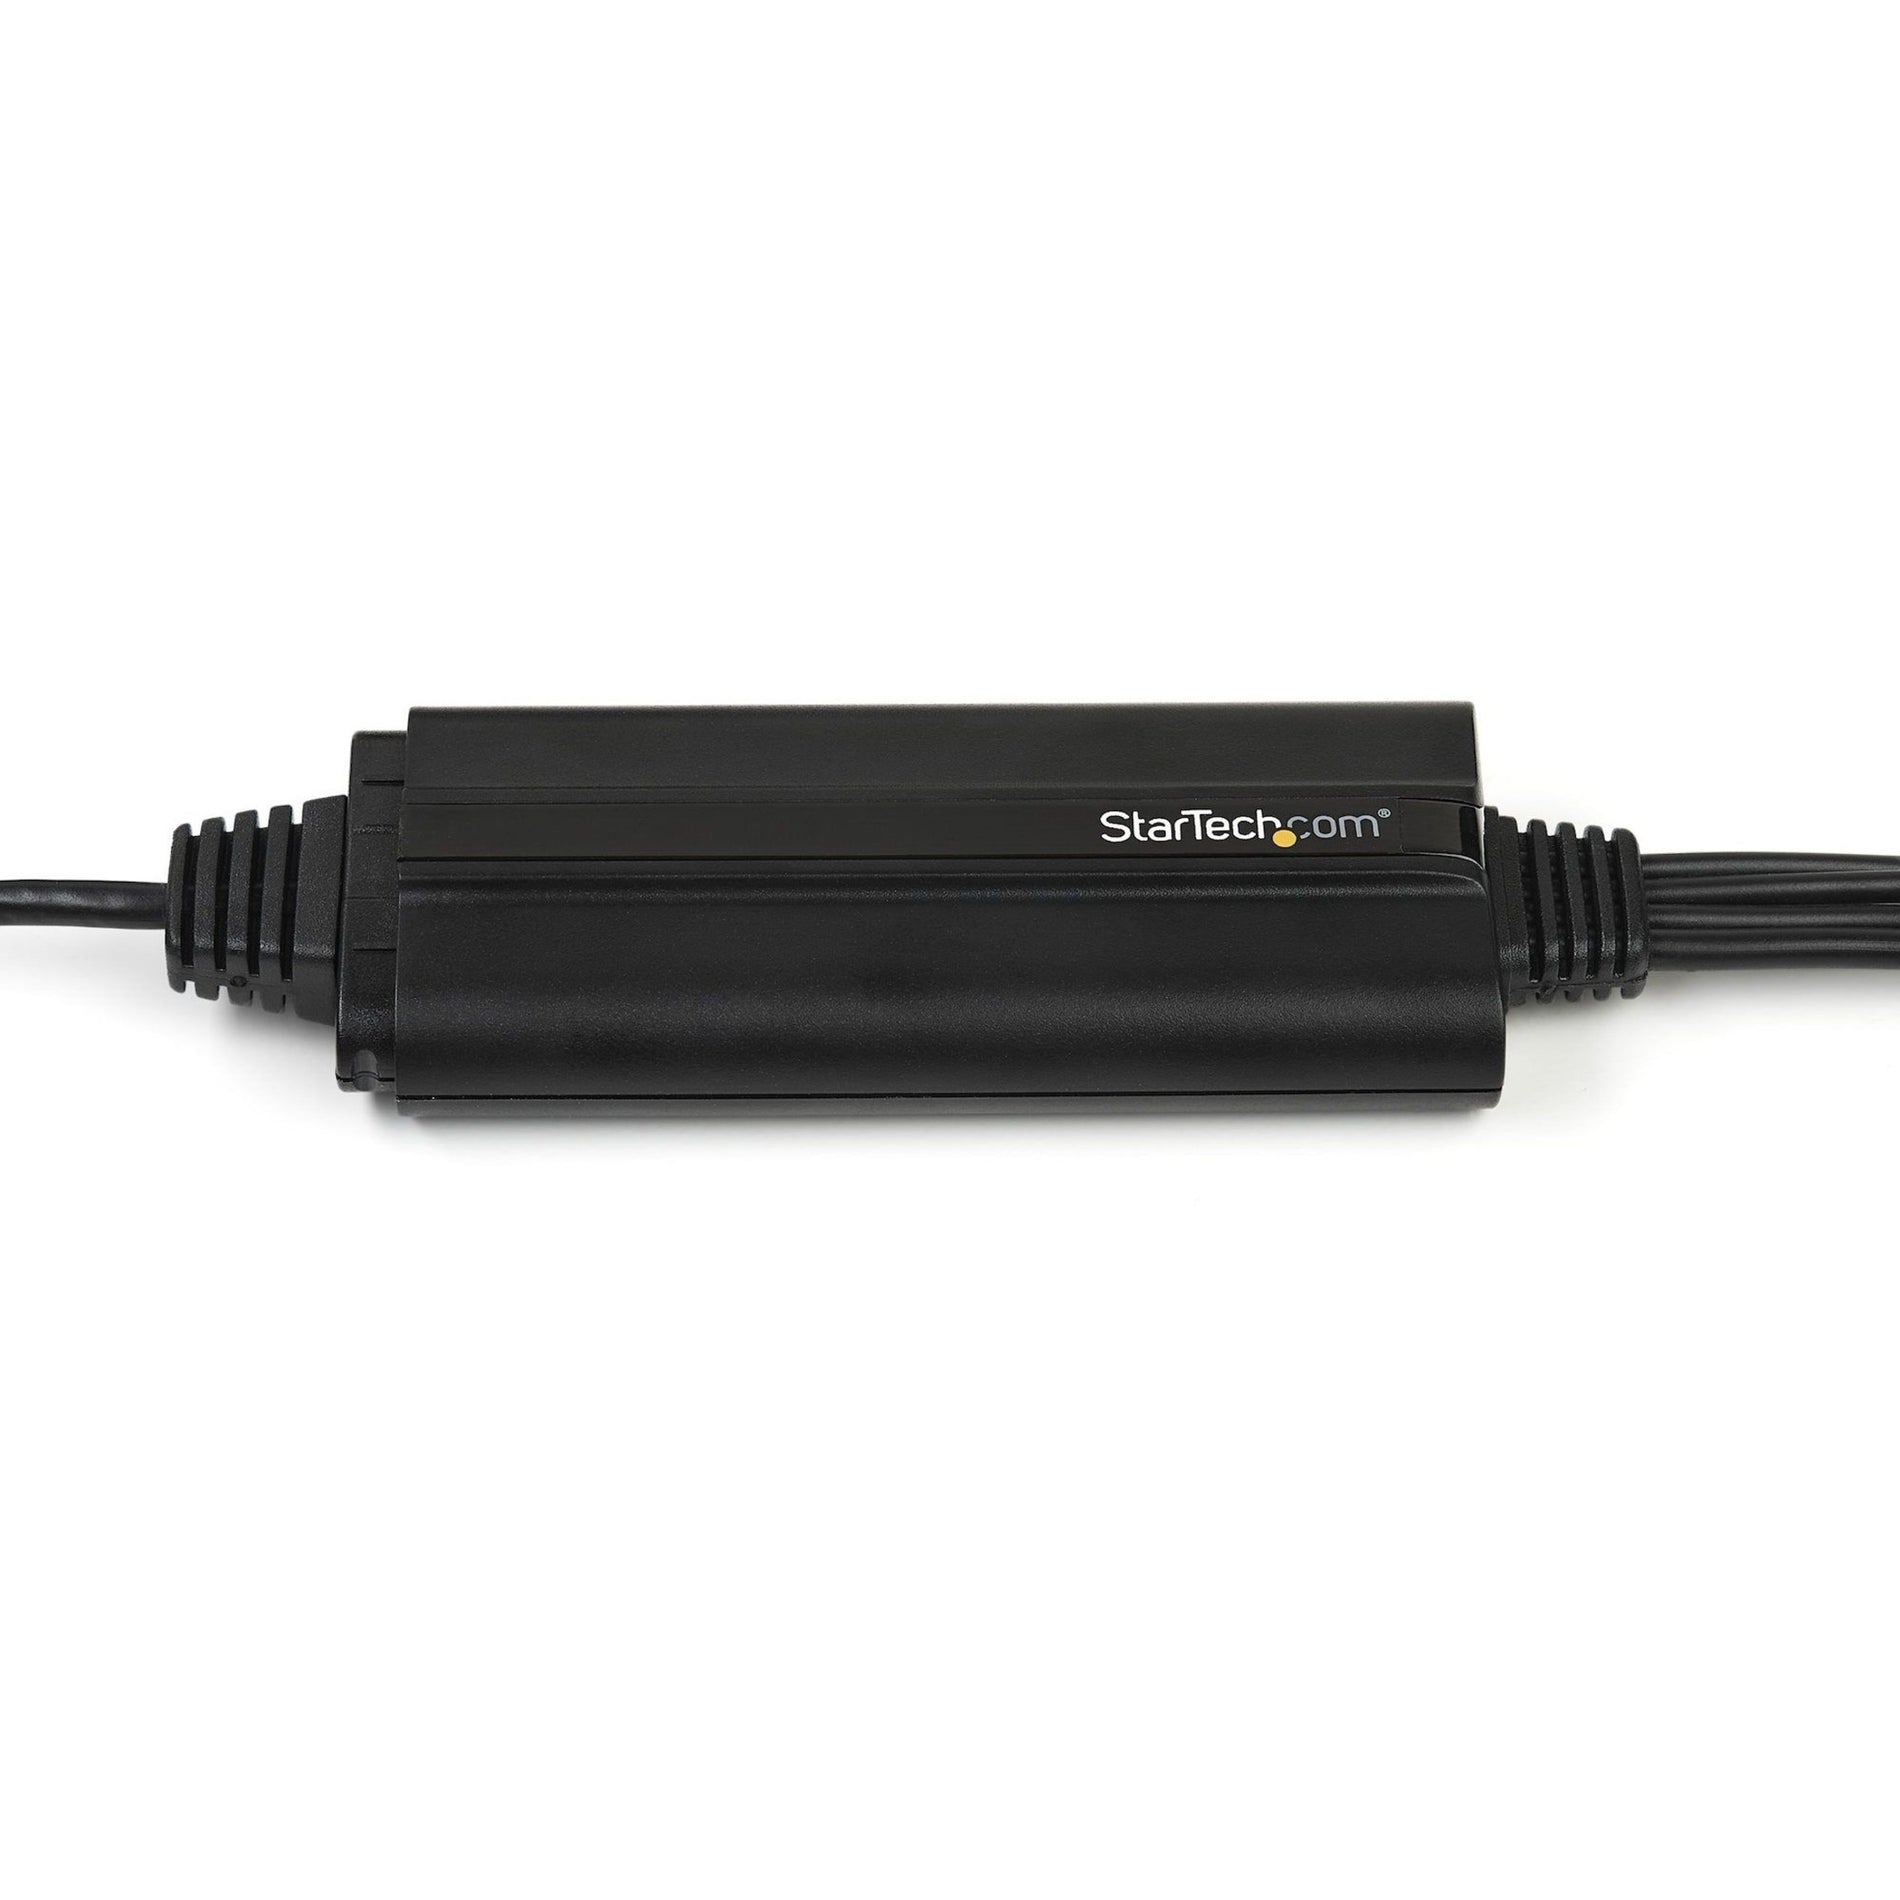 StarTech.com SVID2USB232 USB Video Capture Adapter - Analog to Digital Converter - Windows, S Video / Composite to USB 2.0 Video Capture Cable